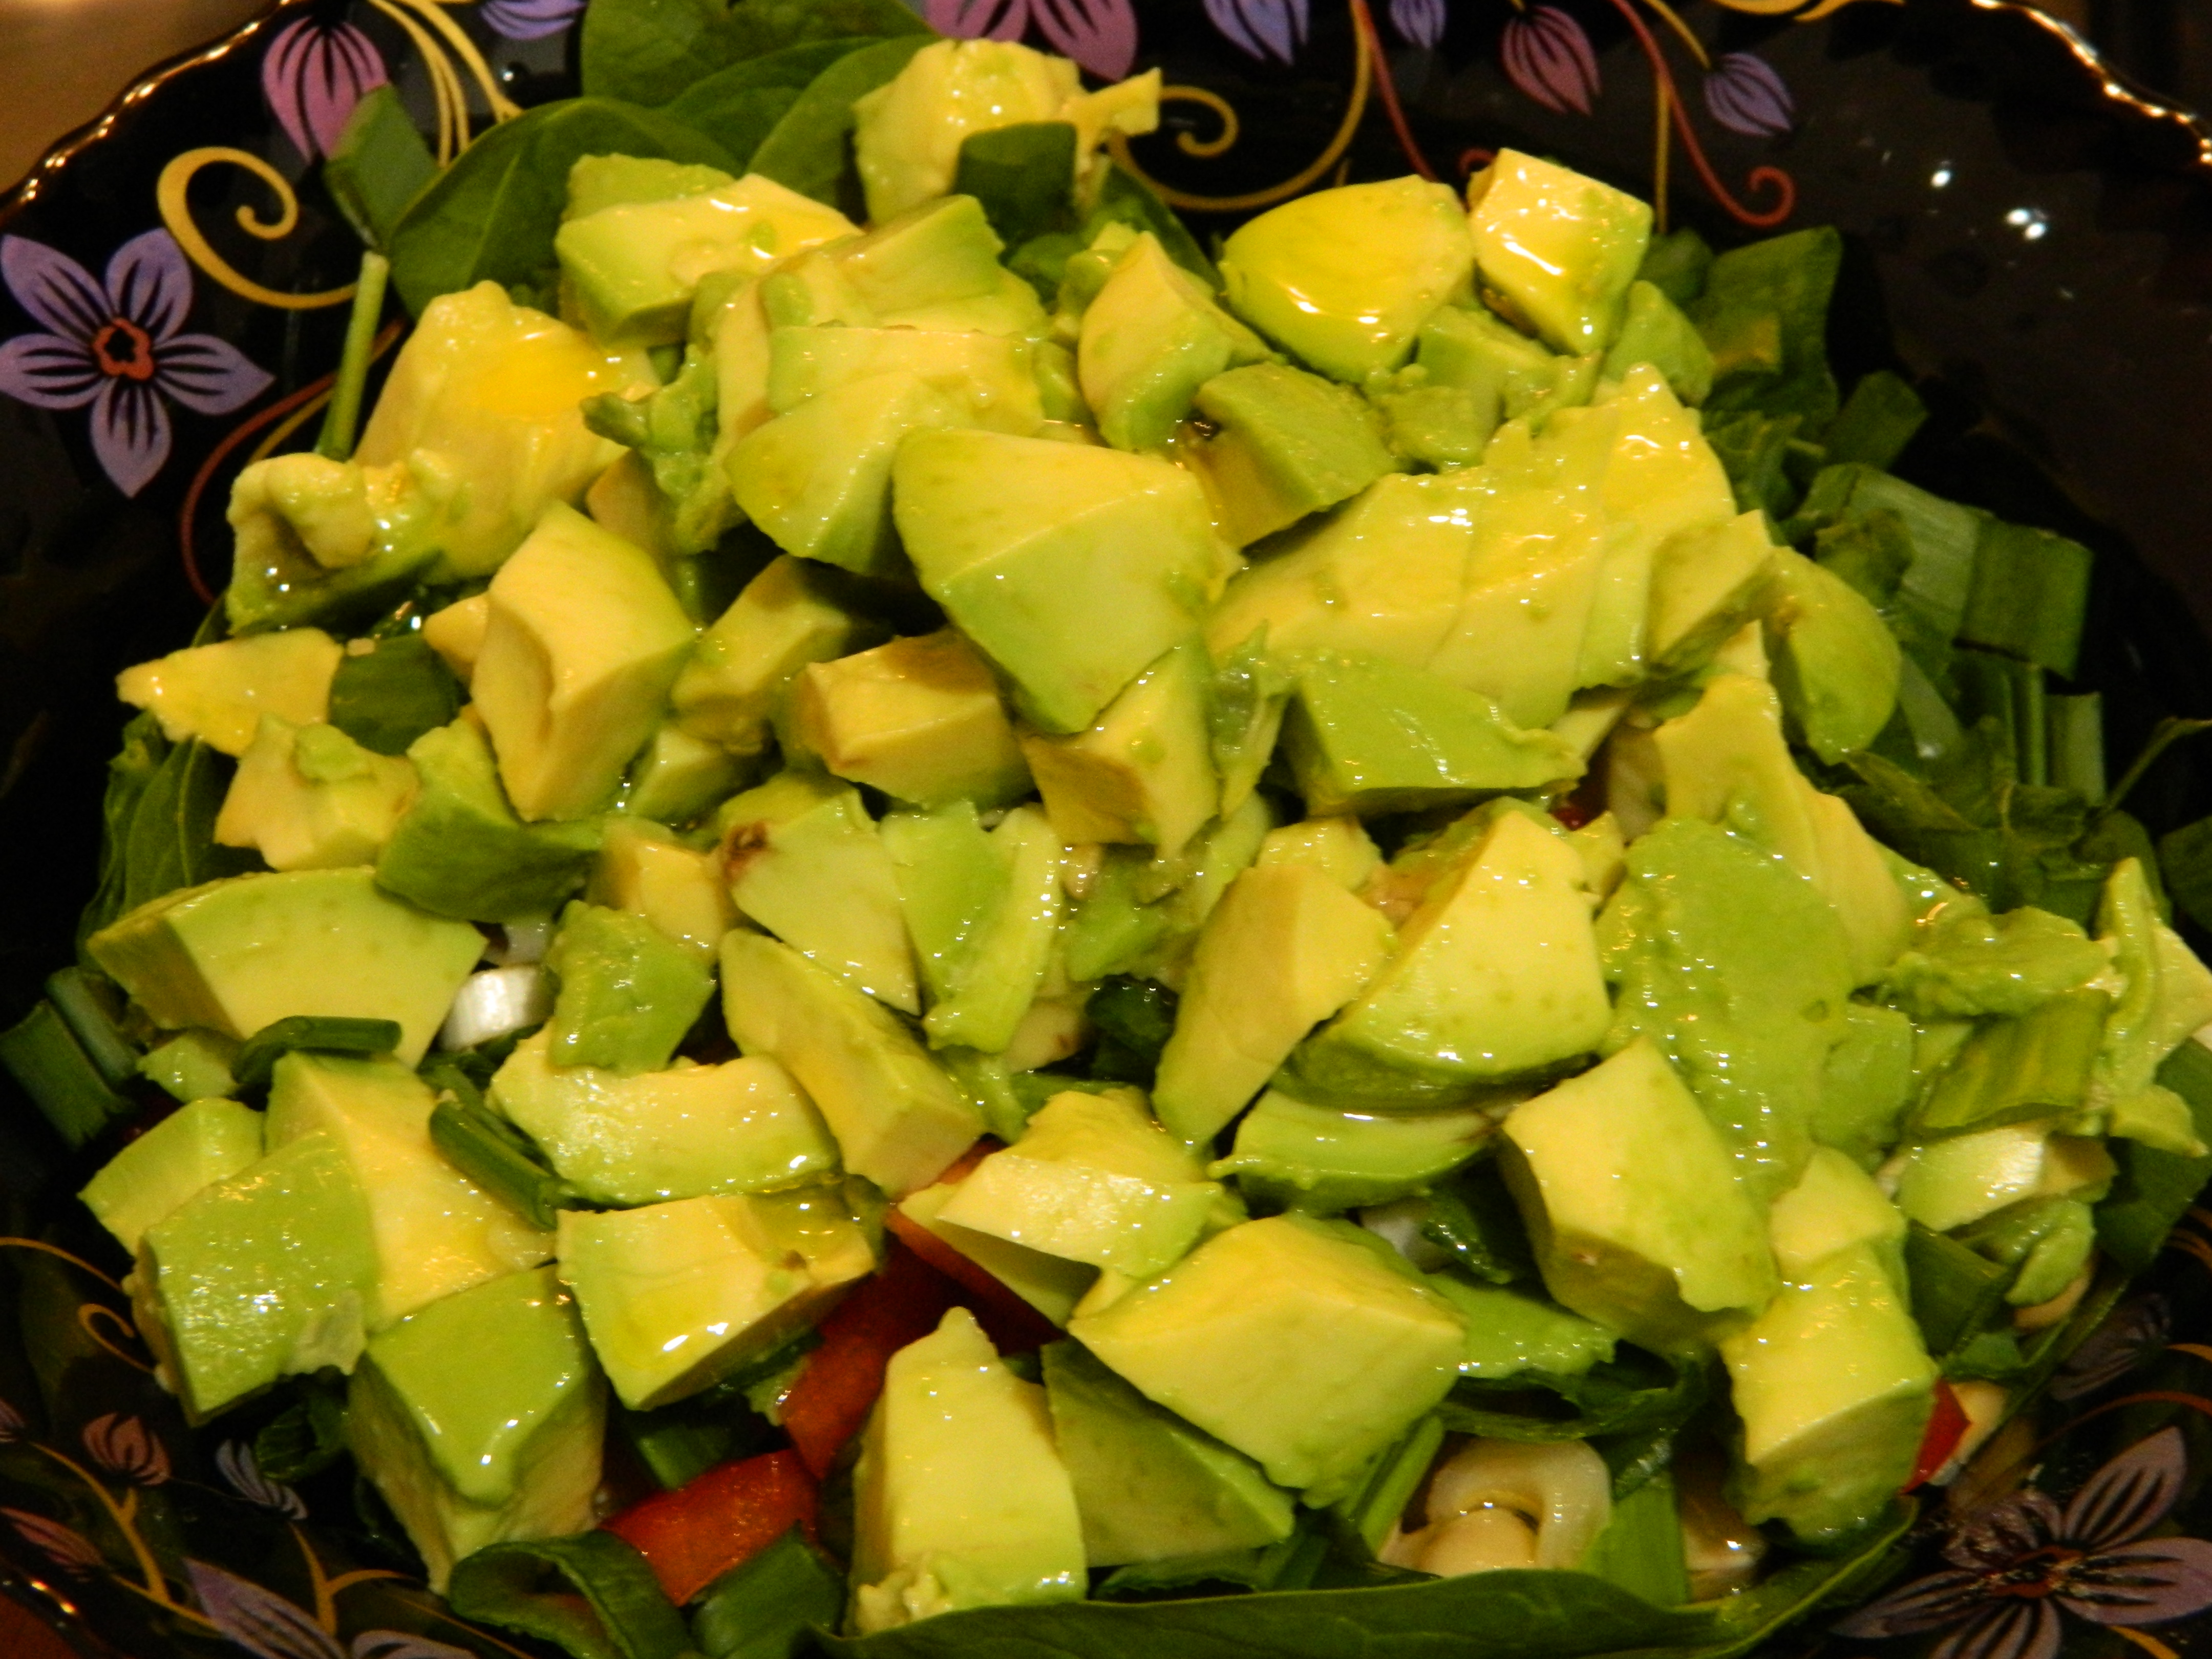 Salata de primavara cu baby spanac, naut si ceapa verde